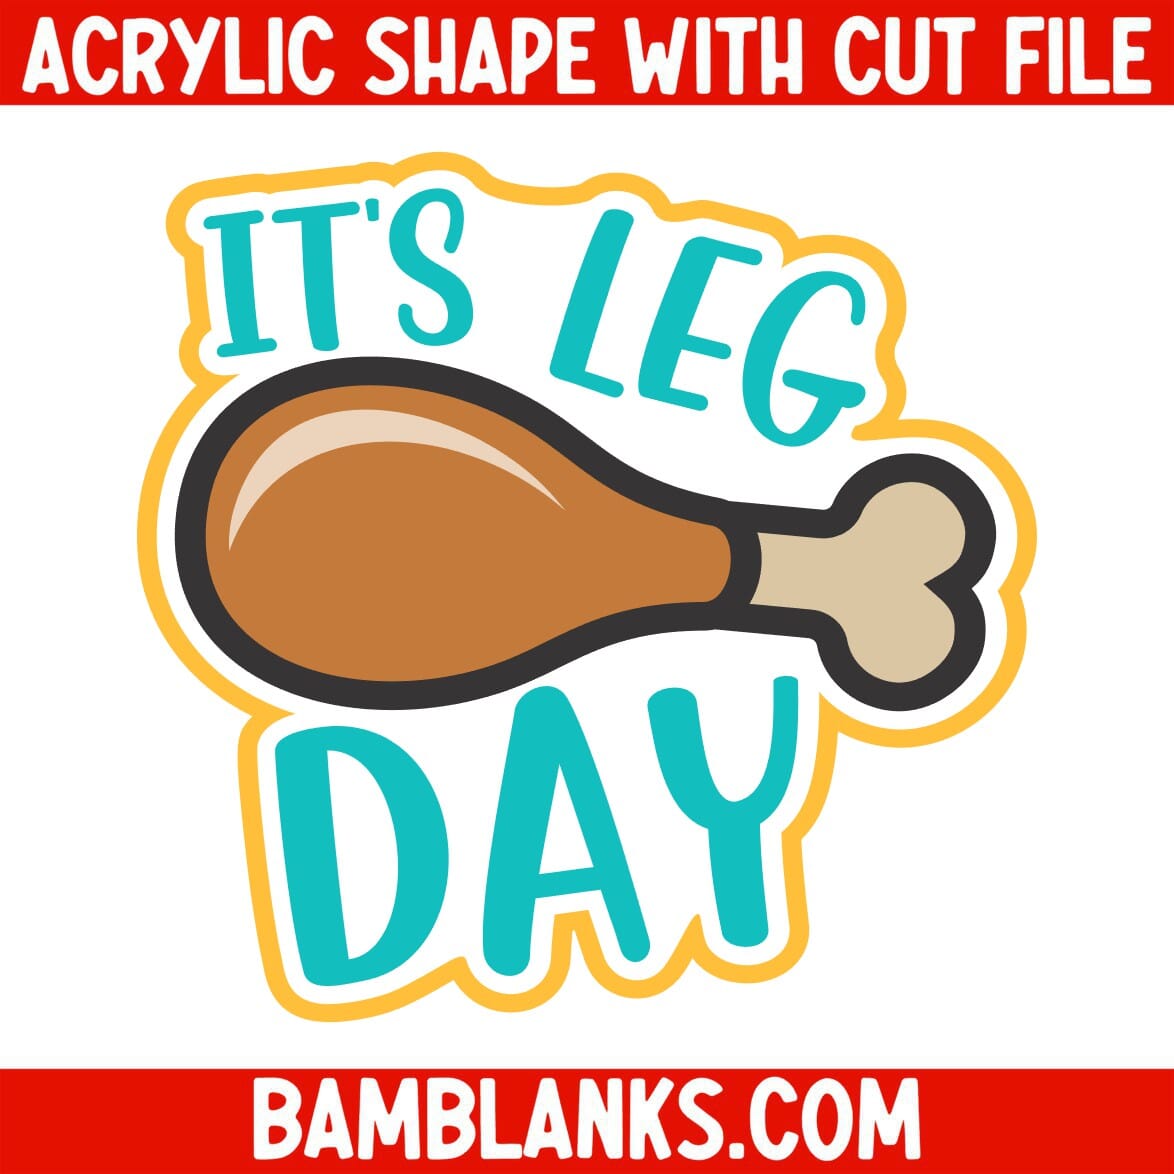 Its Leg Day - Acrylic Shape #2224